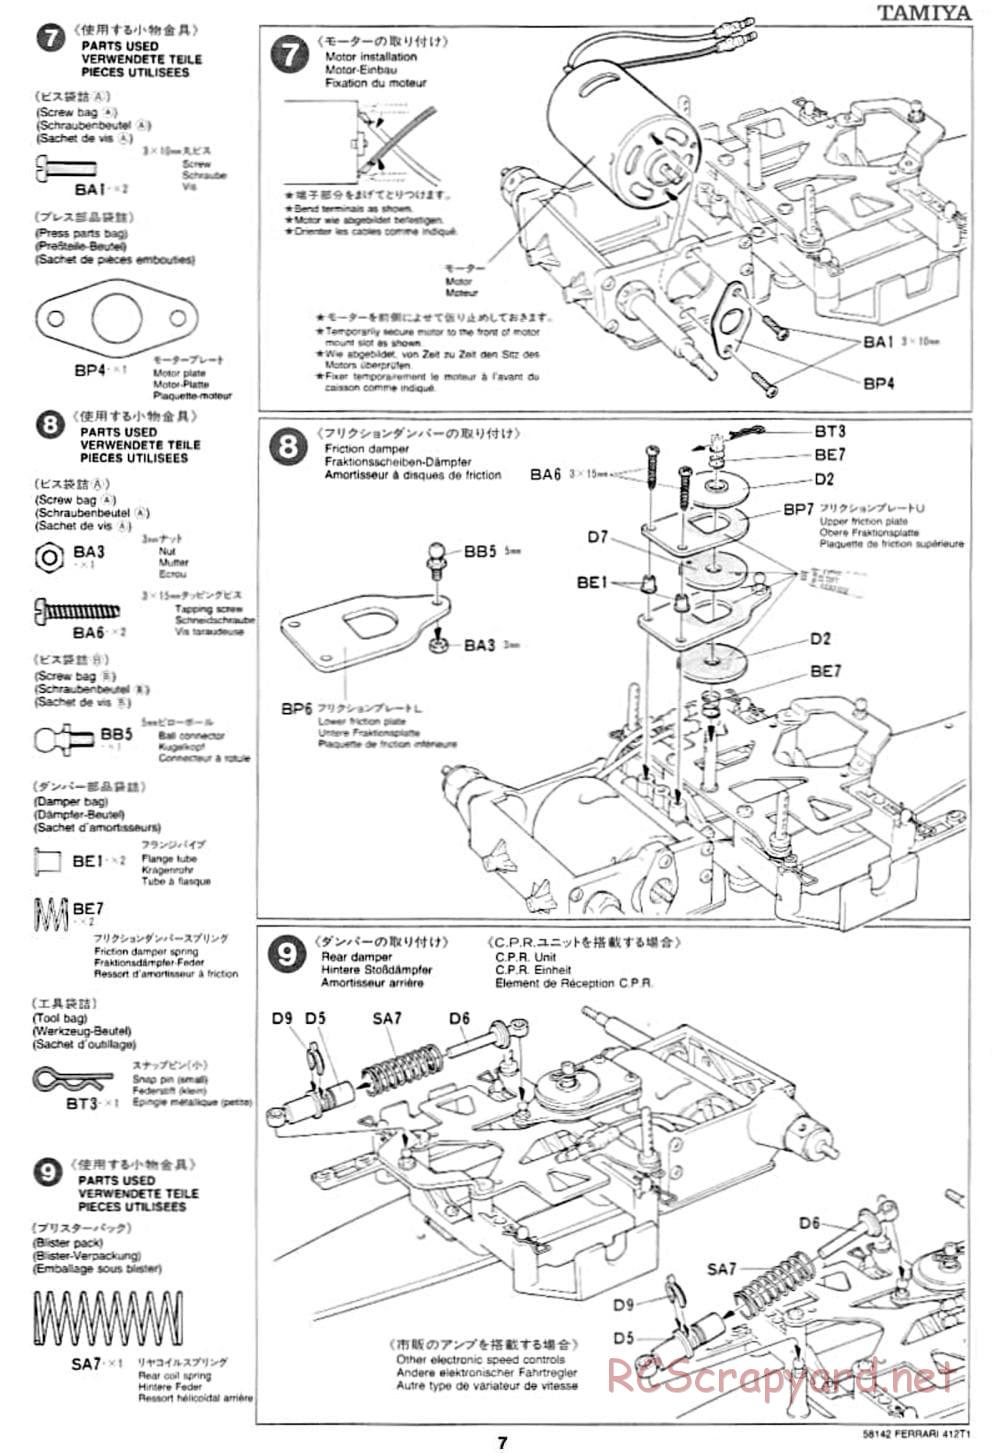 Tamiya - Ferrari 412T1 - F103 Chassis - Manual - Page 7